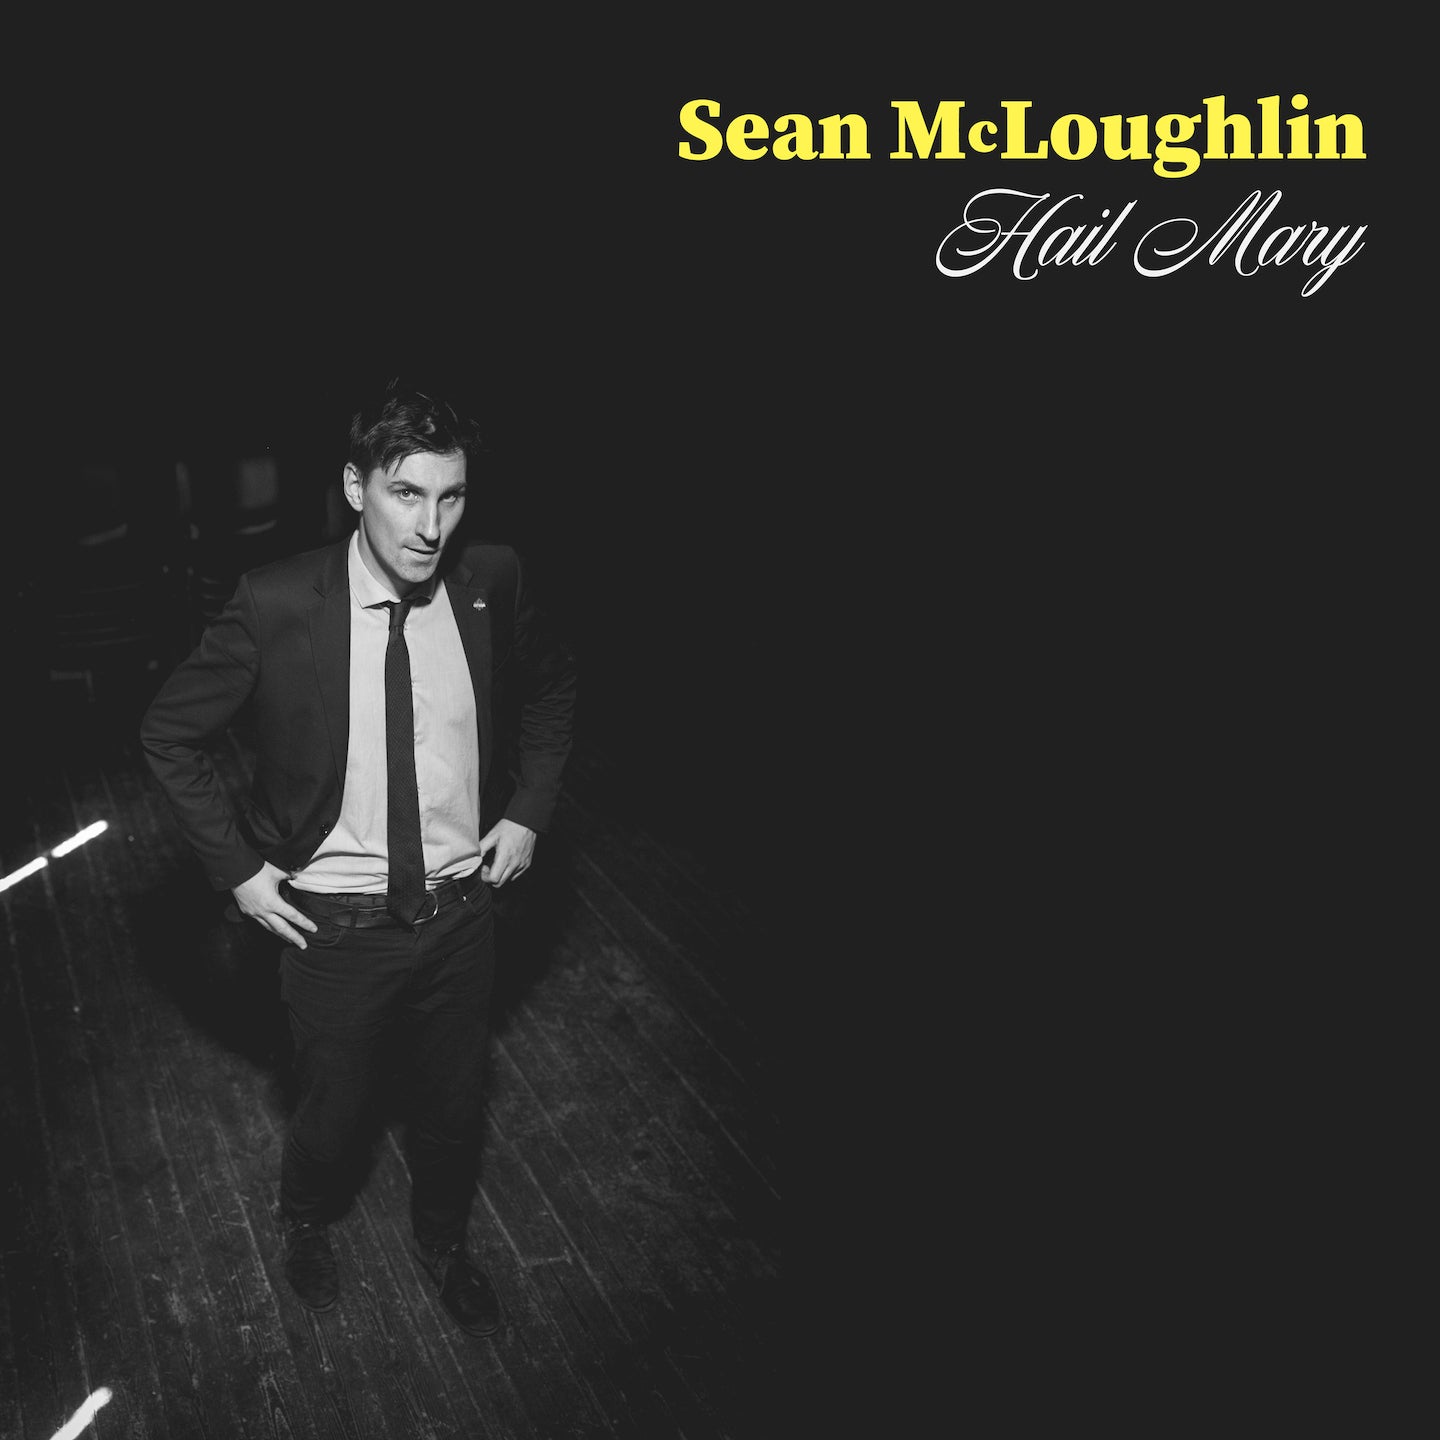 The Real Sean McLoughlin